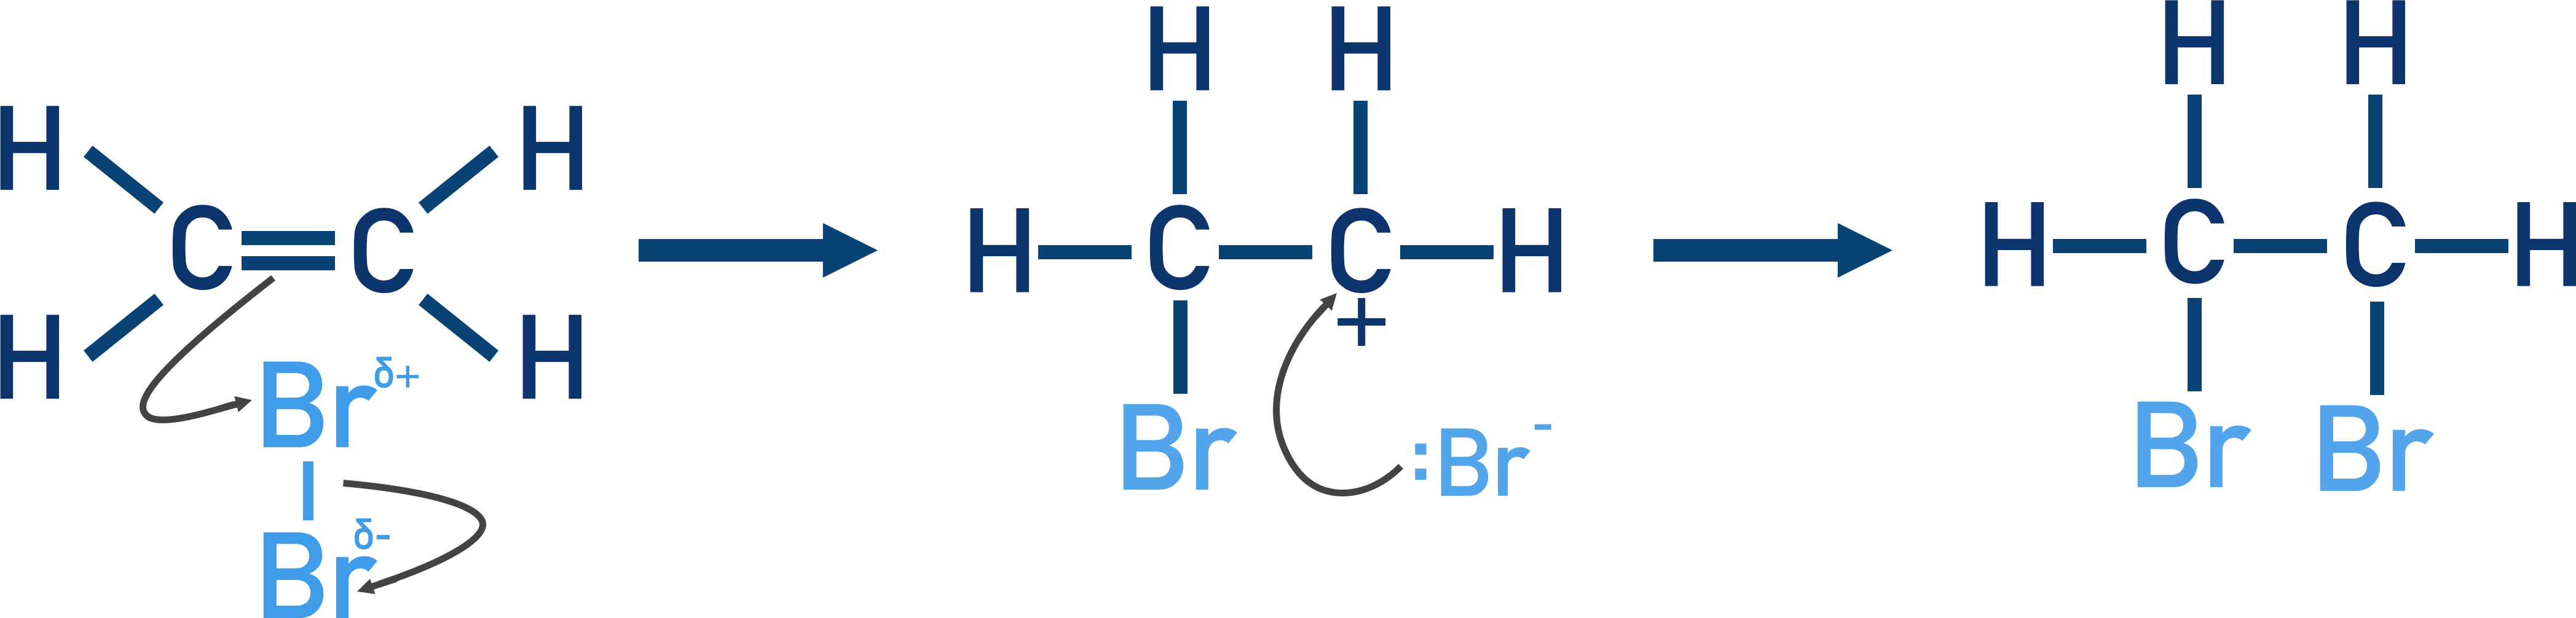 electrophilic addition of ethene with bromine mechanism